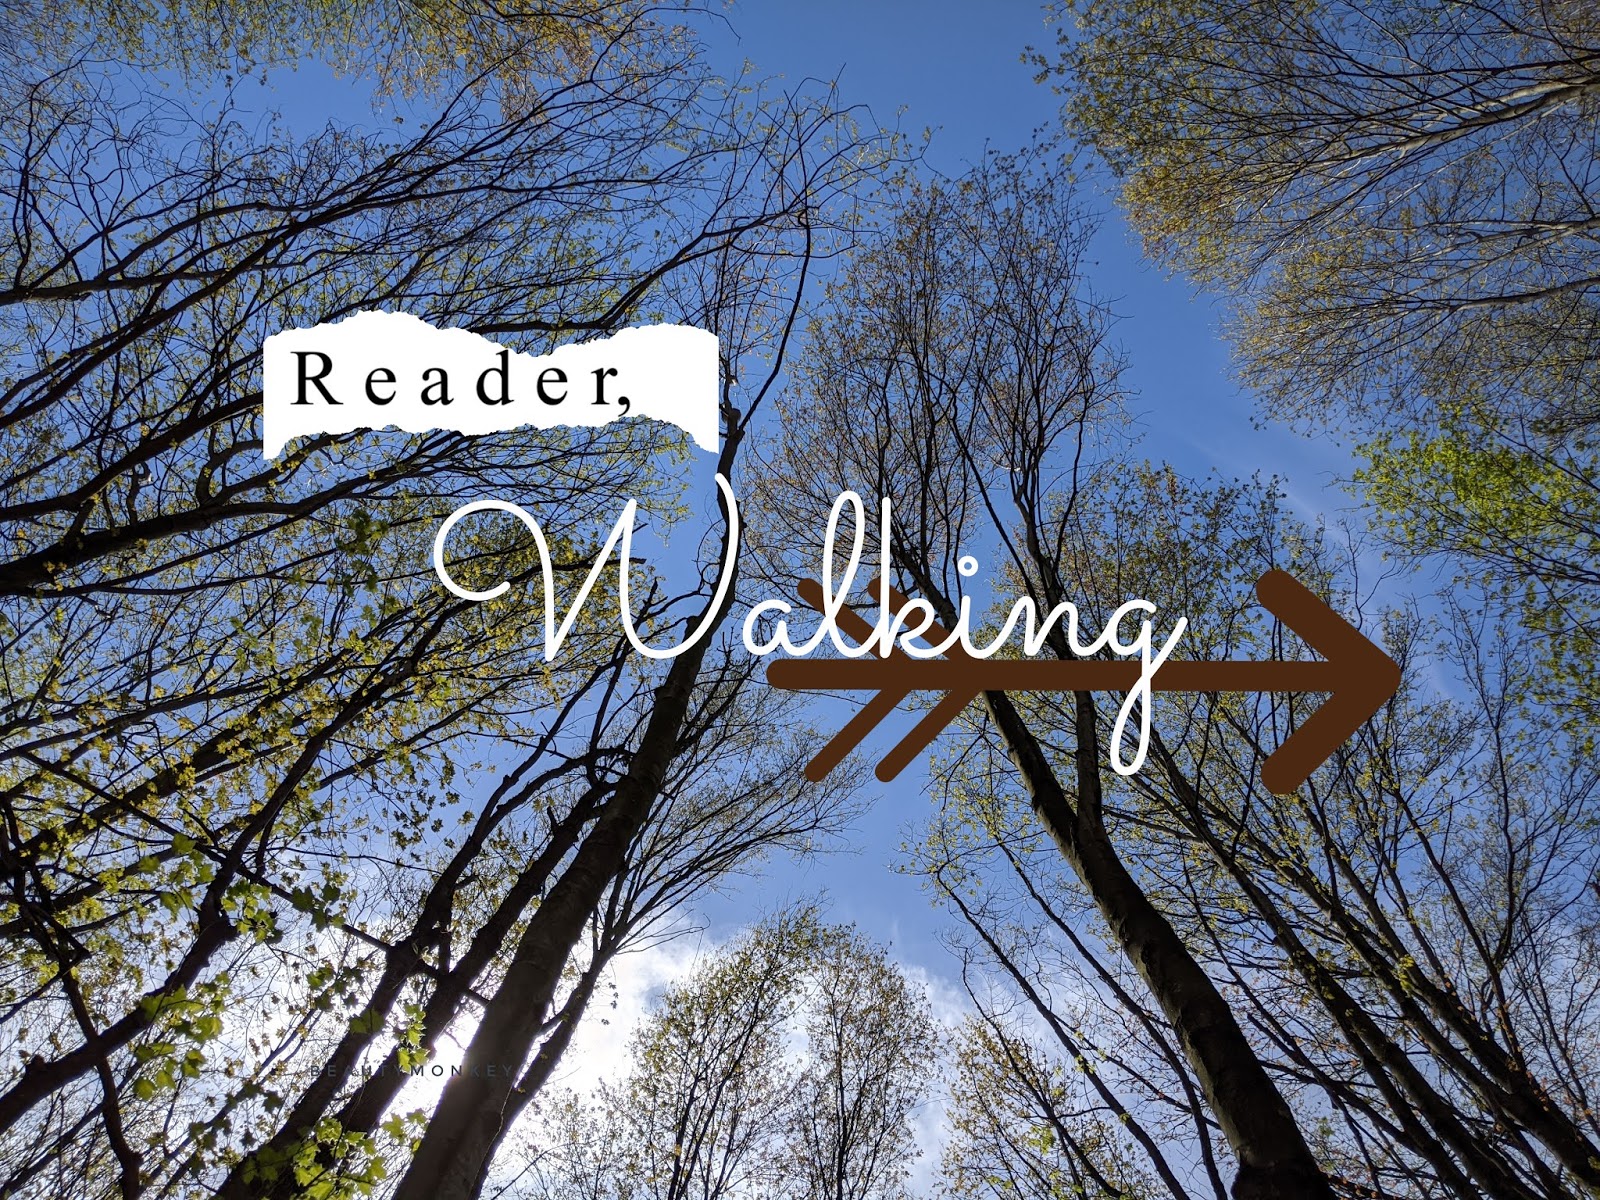 Reader, Walking: Small, Incremental Habits